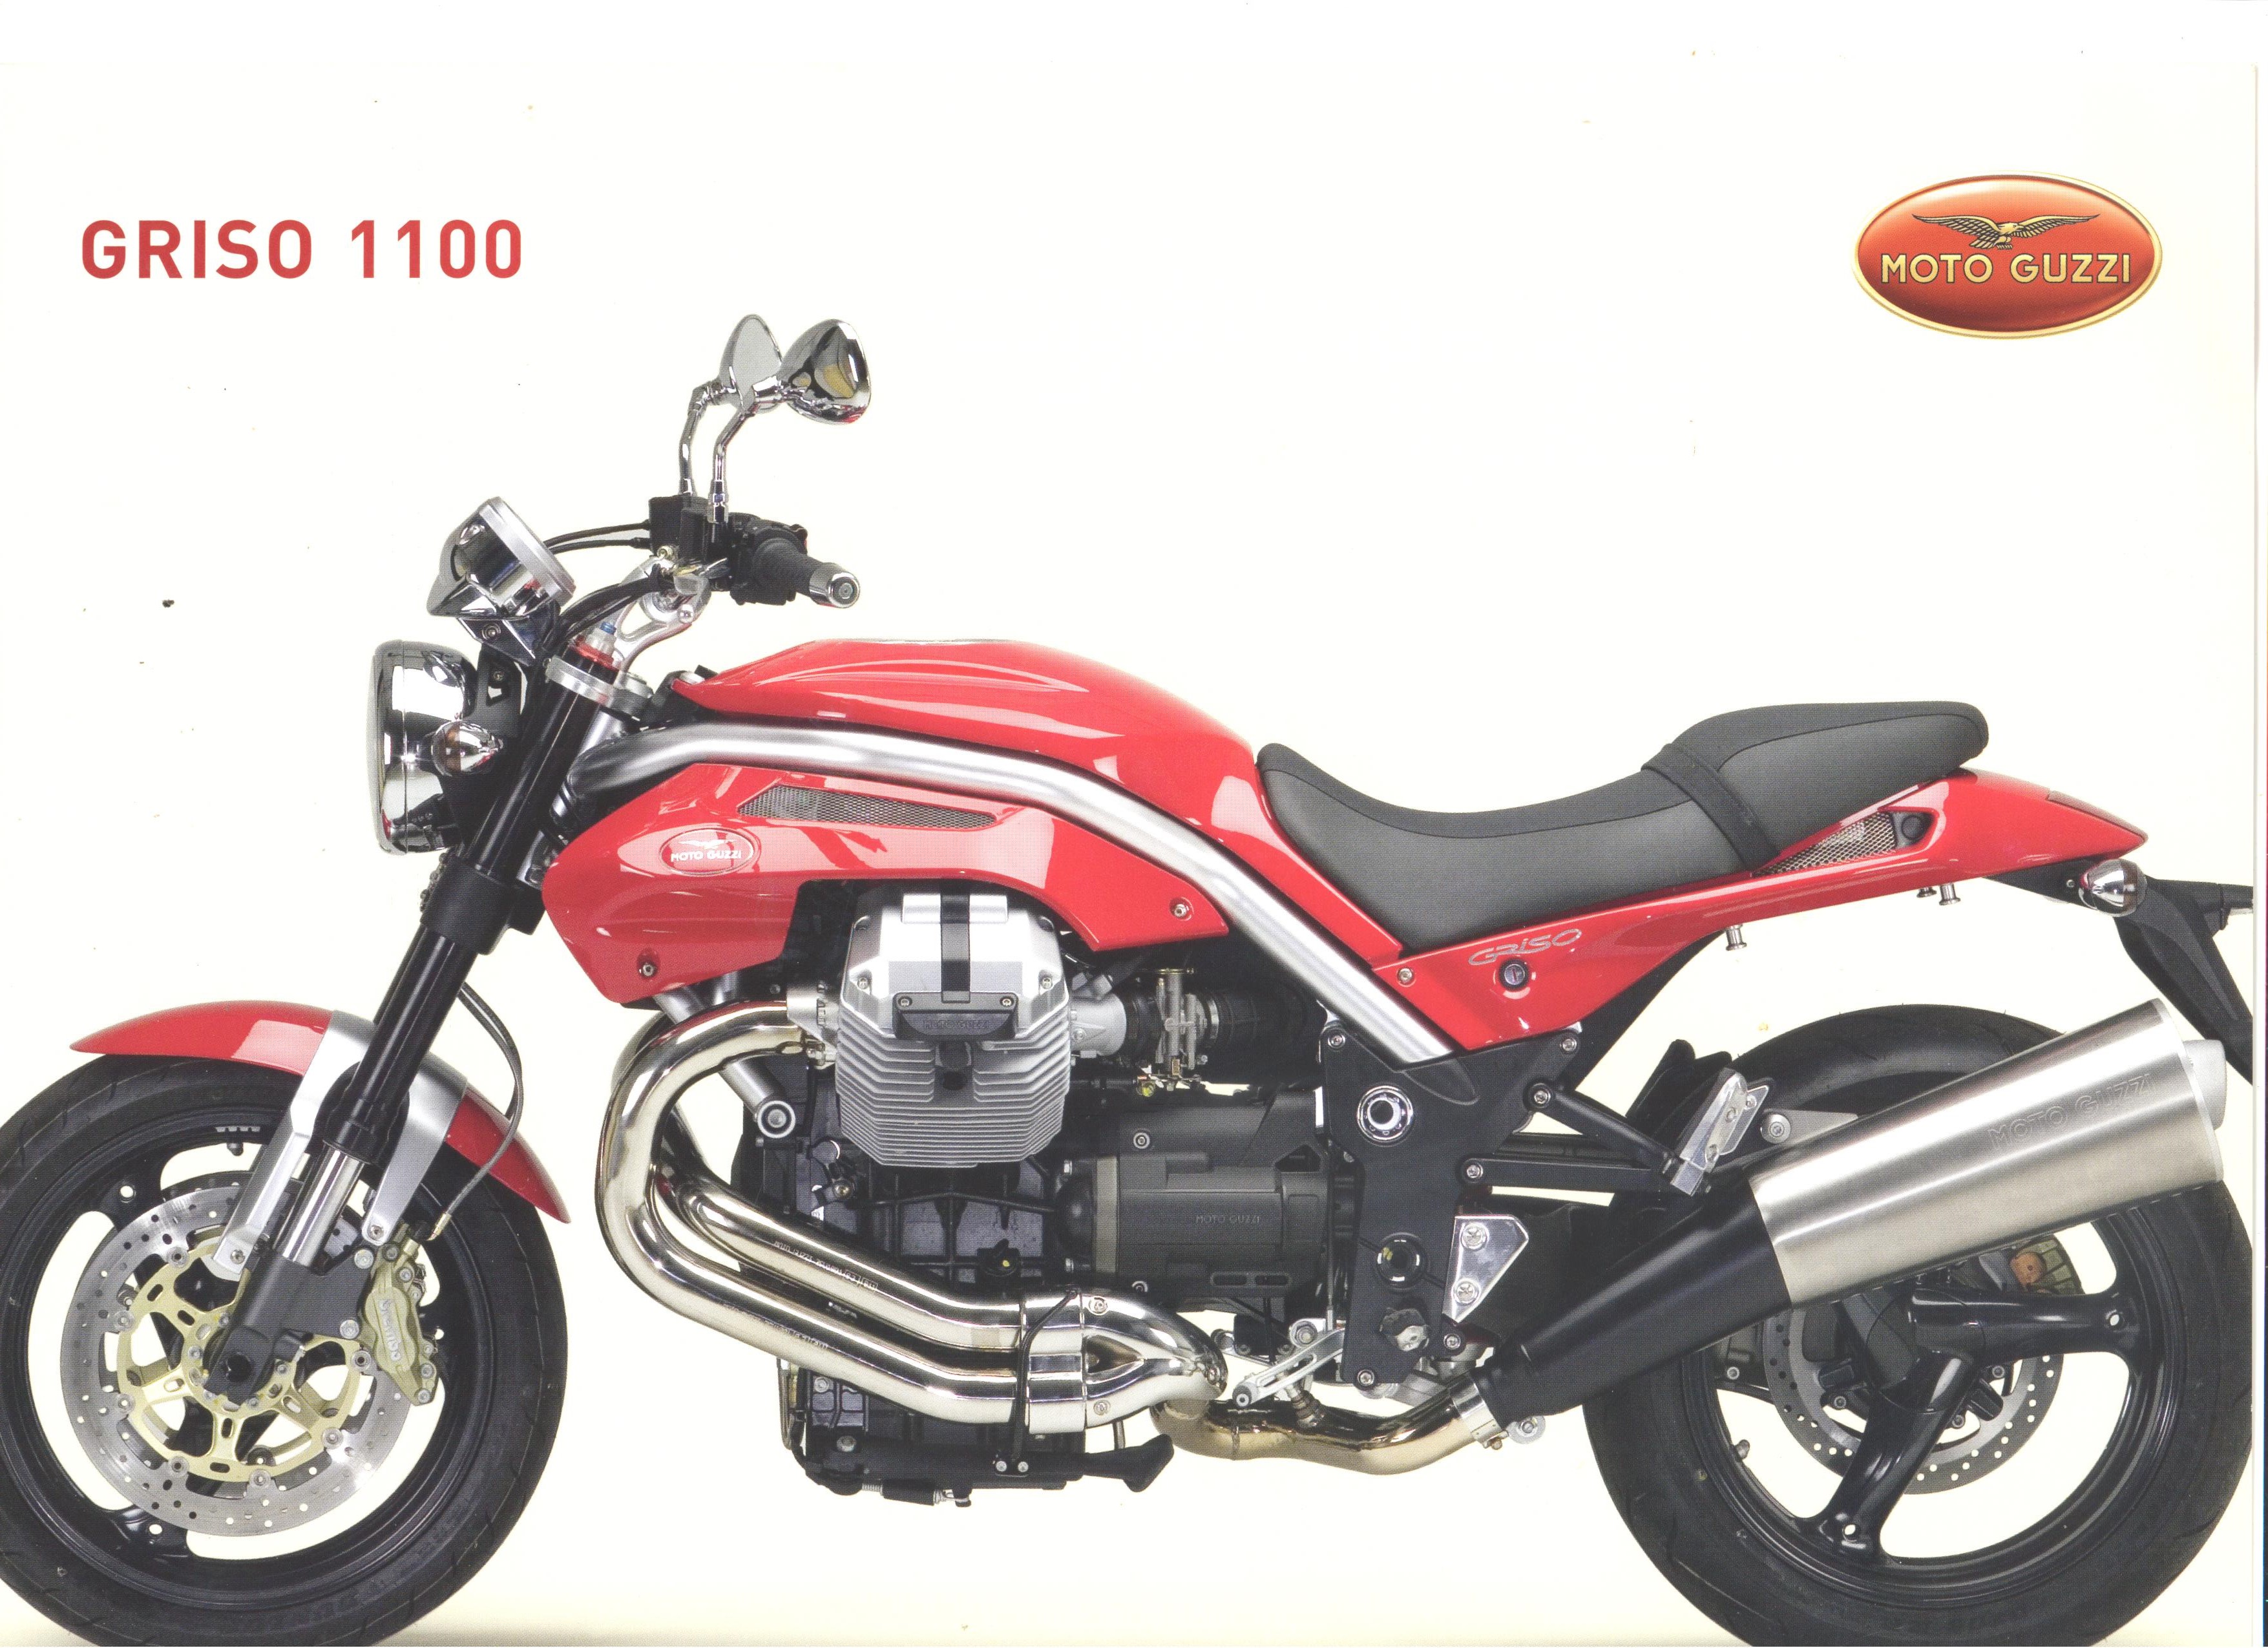 Moto Guzzi factory brochure: Griso 1100